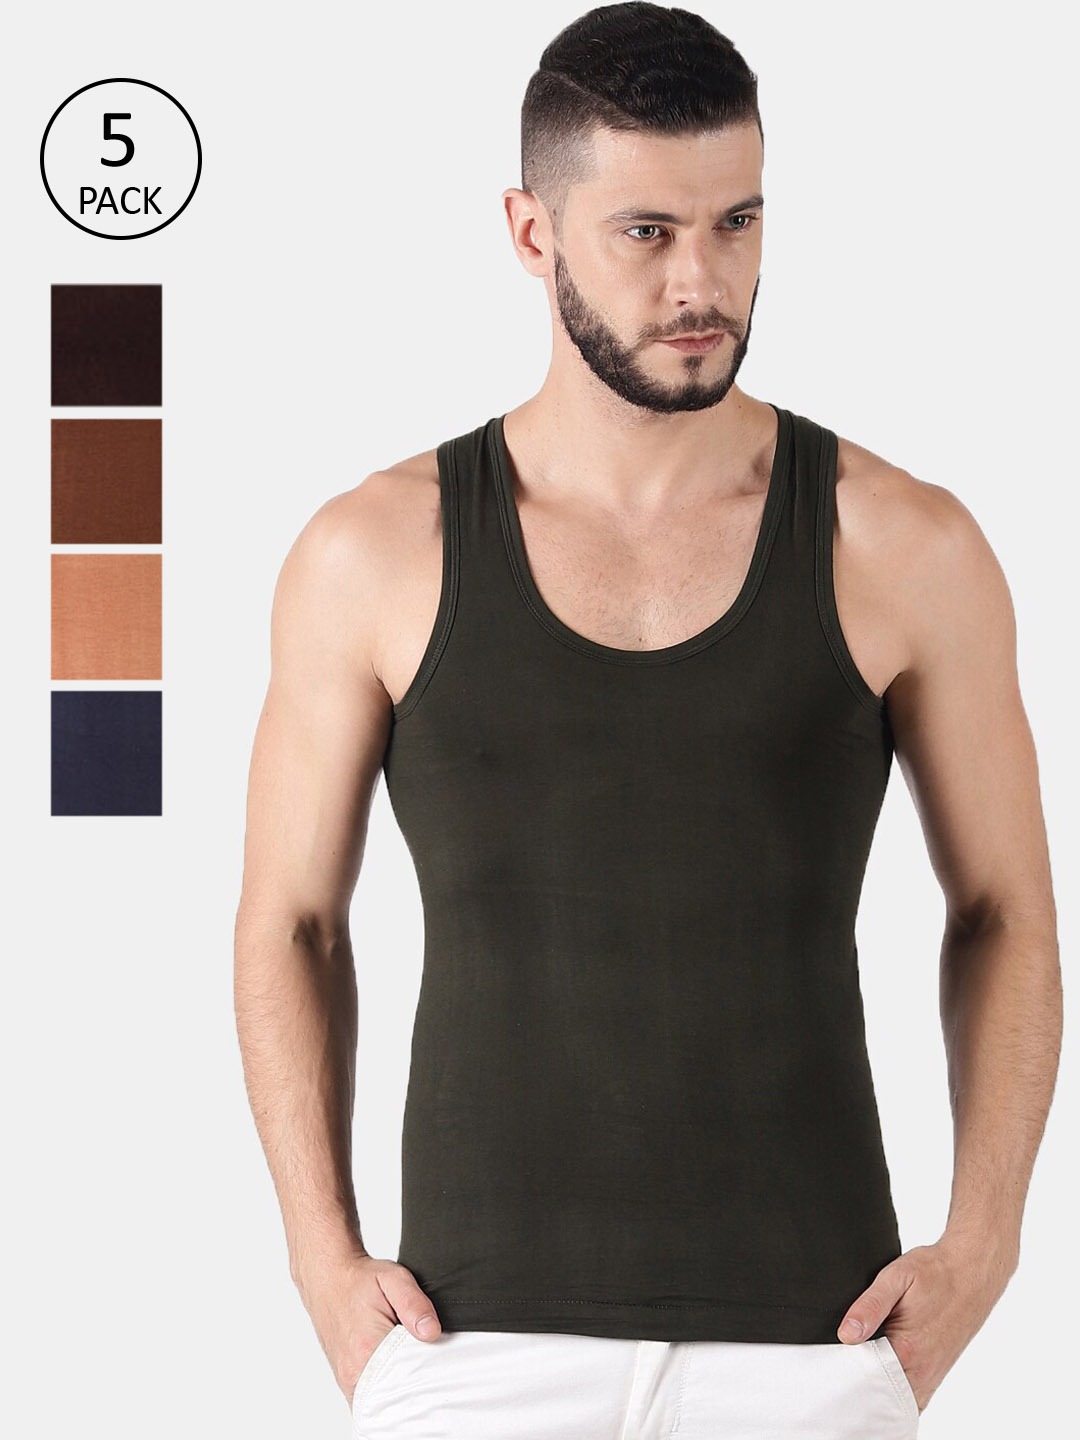 Clothing Innerwear Vests | Dollar Men Pack of 5 Assorted Innerwear Vests MLHVE-01-PO5-ASST1 - RA50425